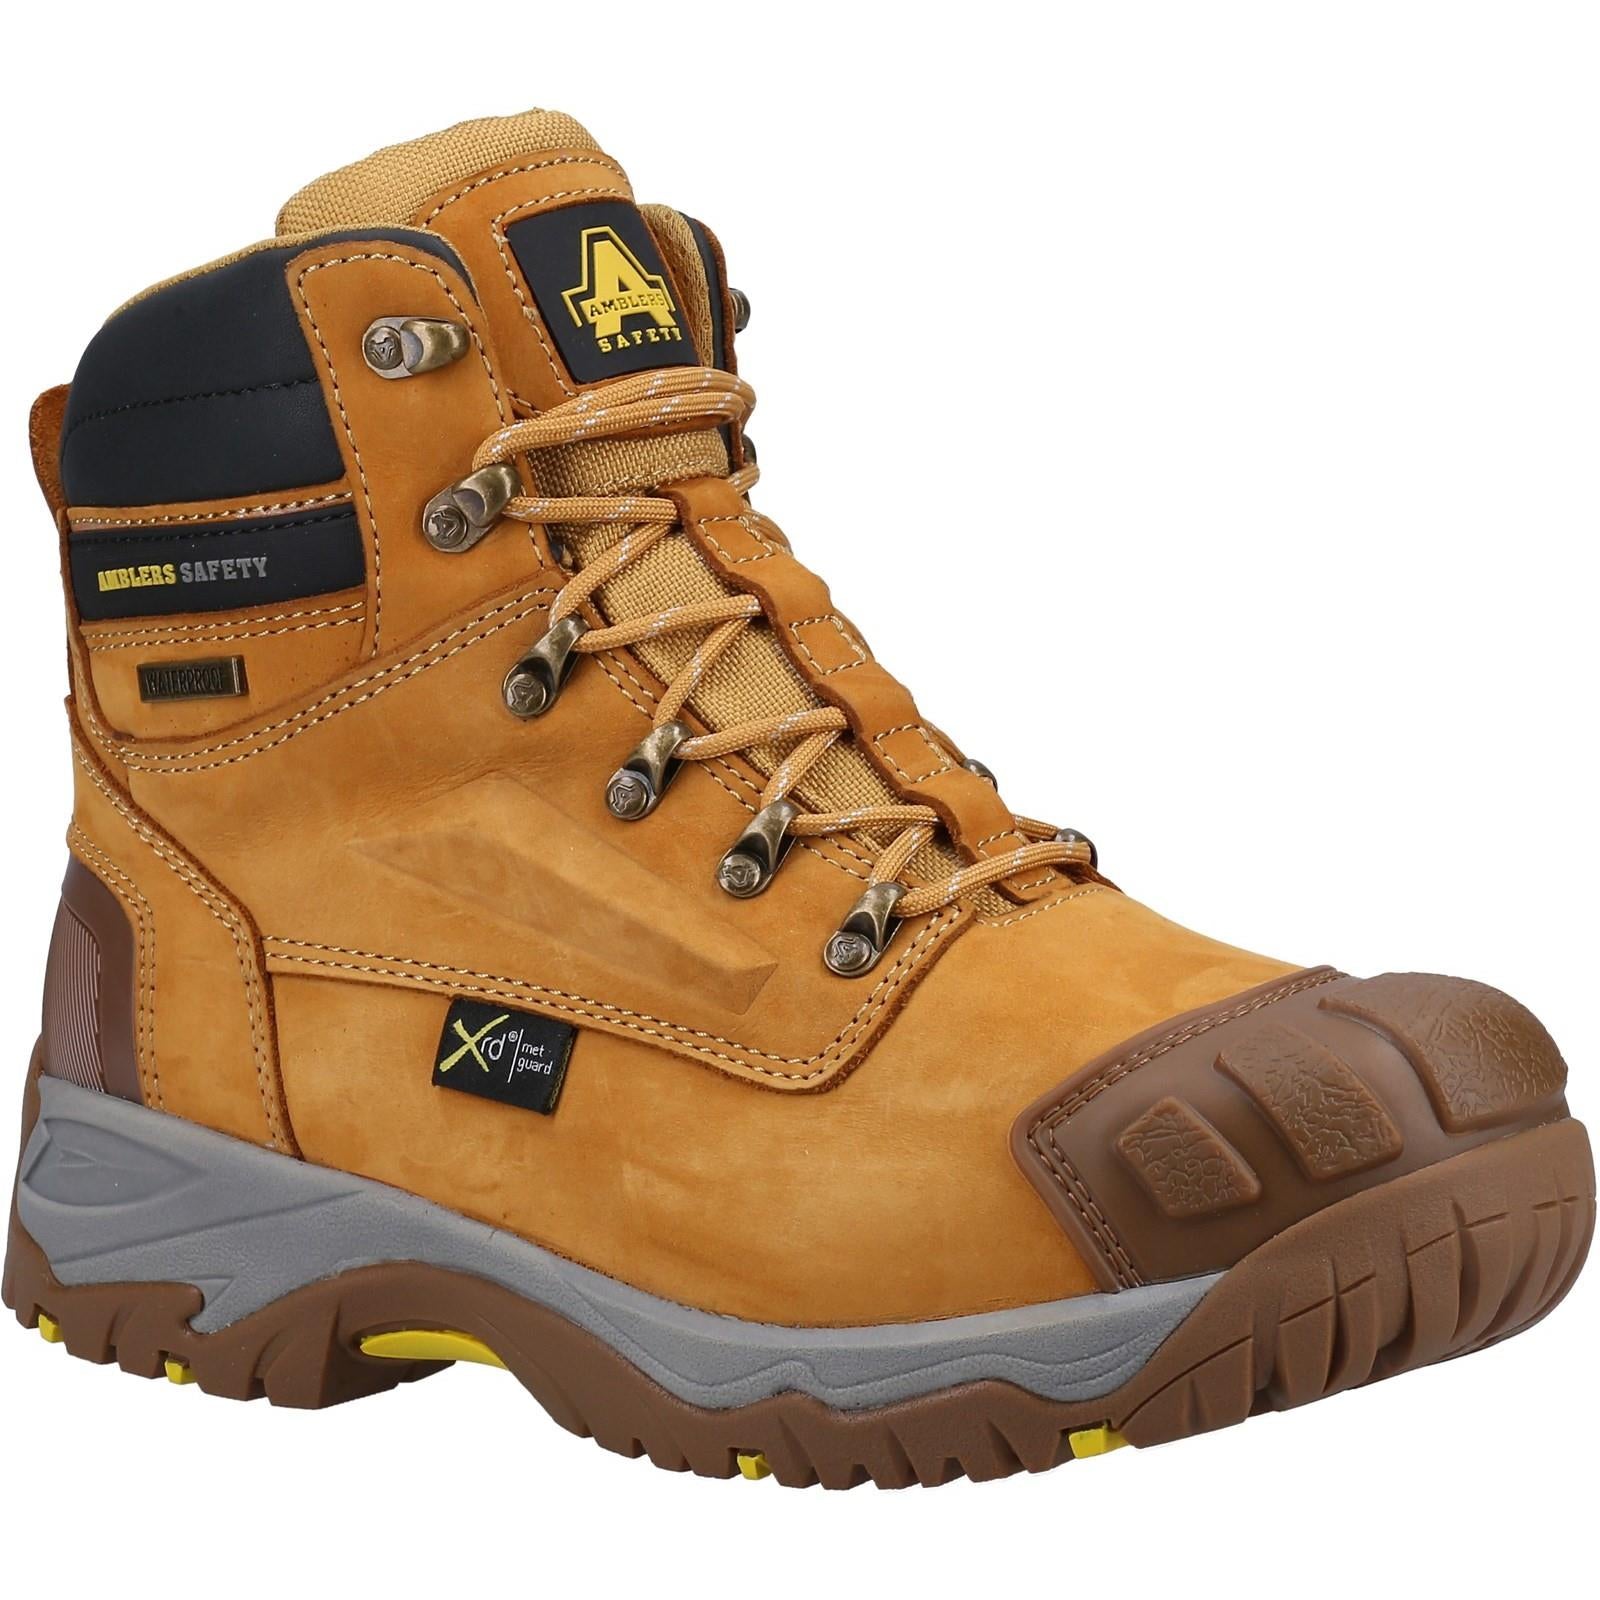 Amblers AS986 S3 honey steel toe/midsole waterproof scuff cap work safety boots